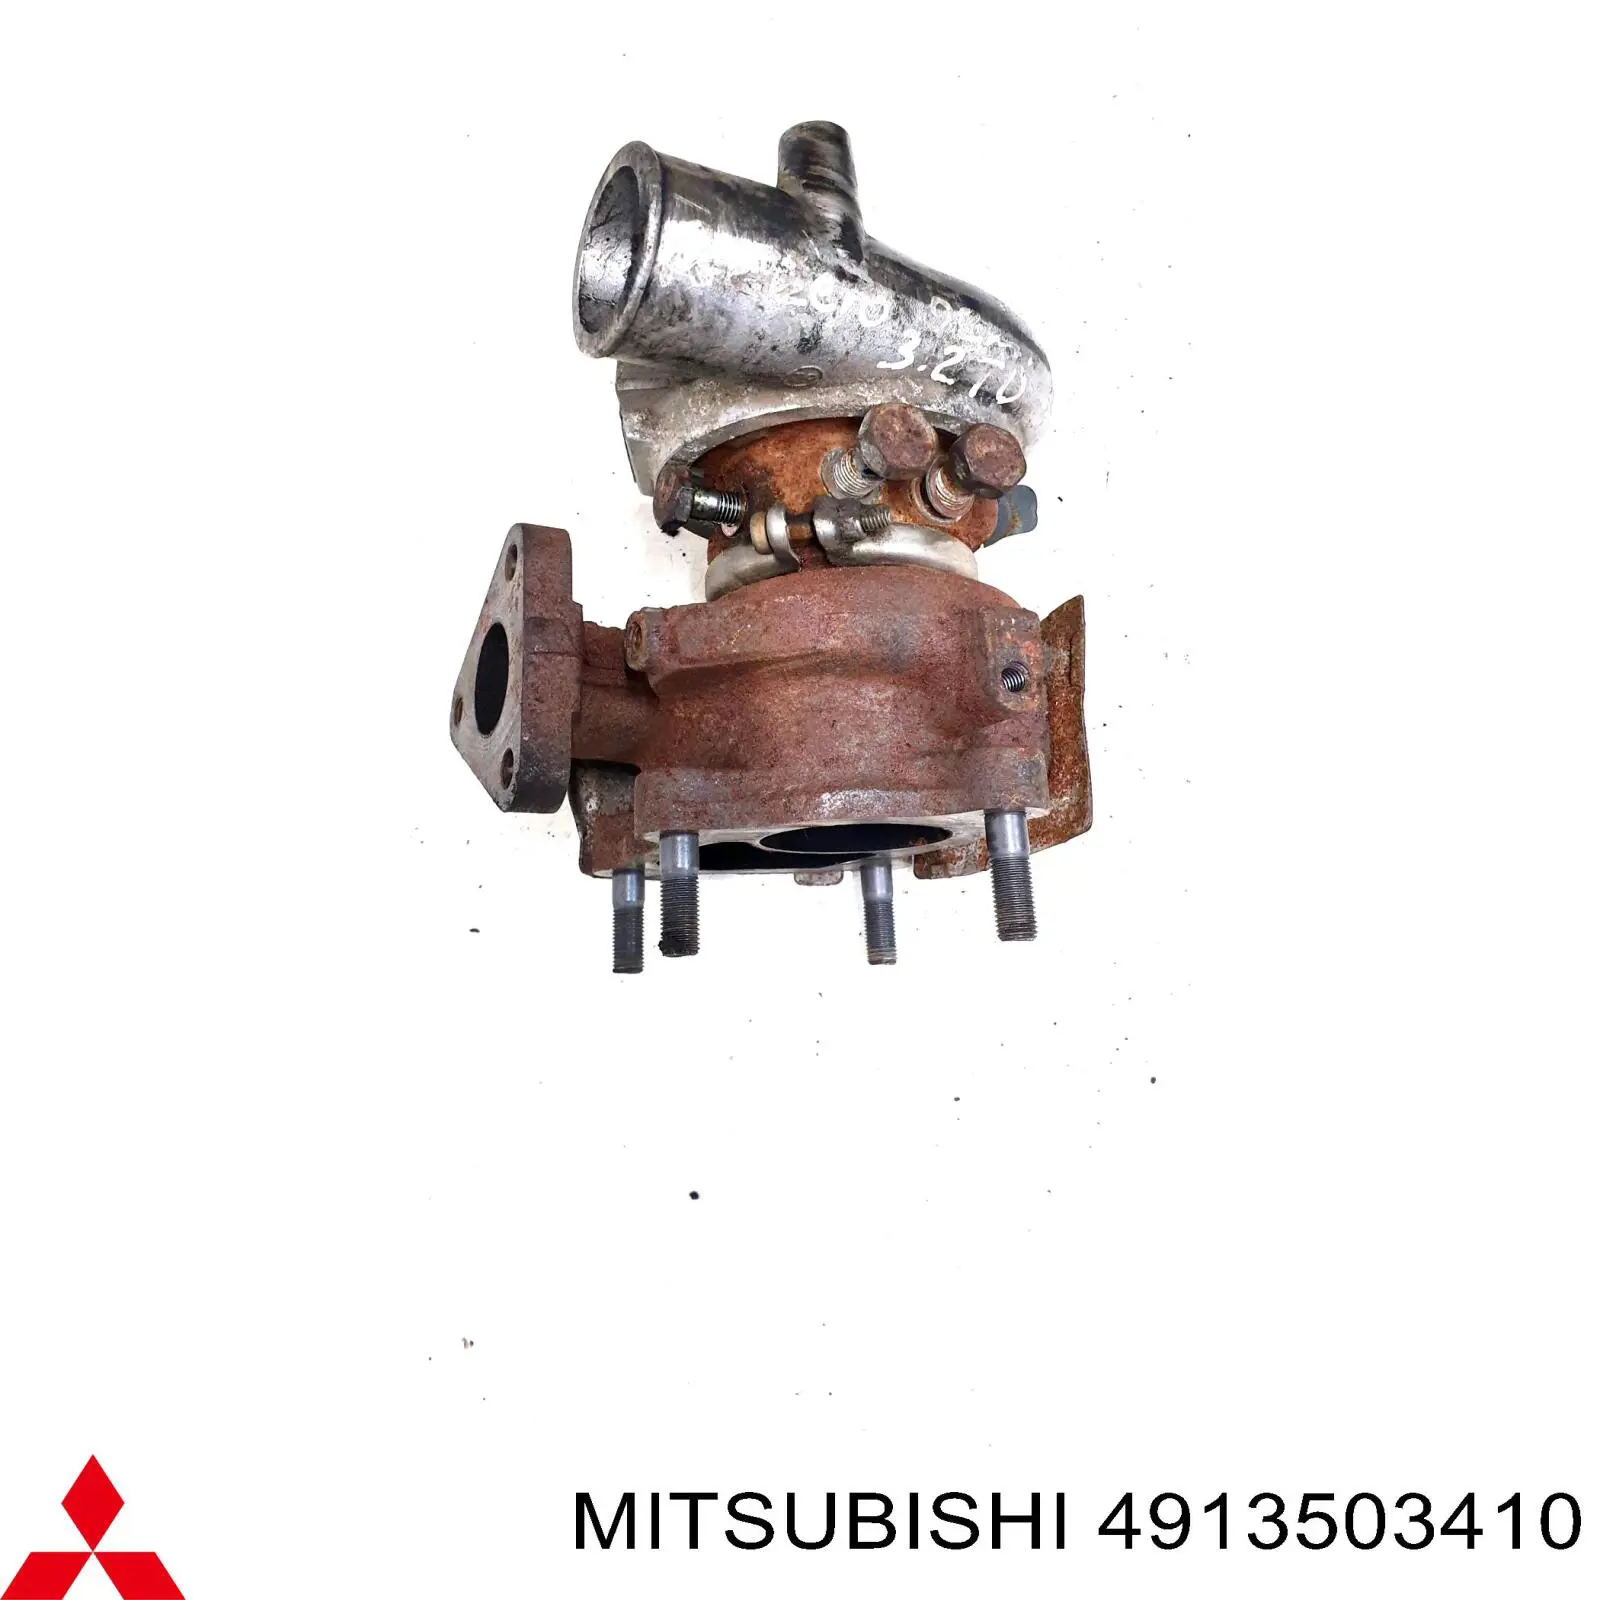 49135-03410 Mitsubishi turbocompresor